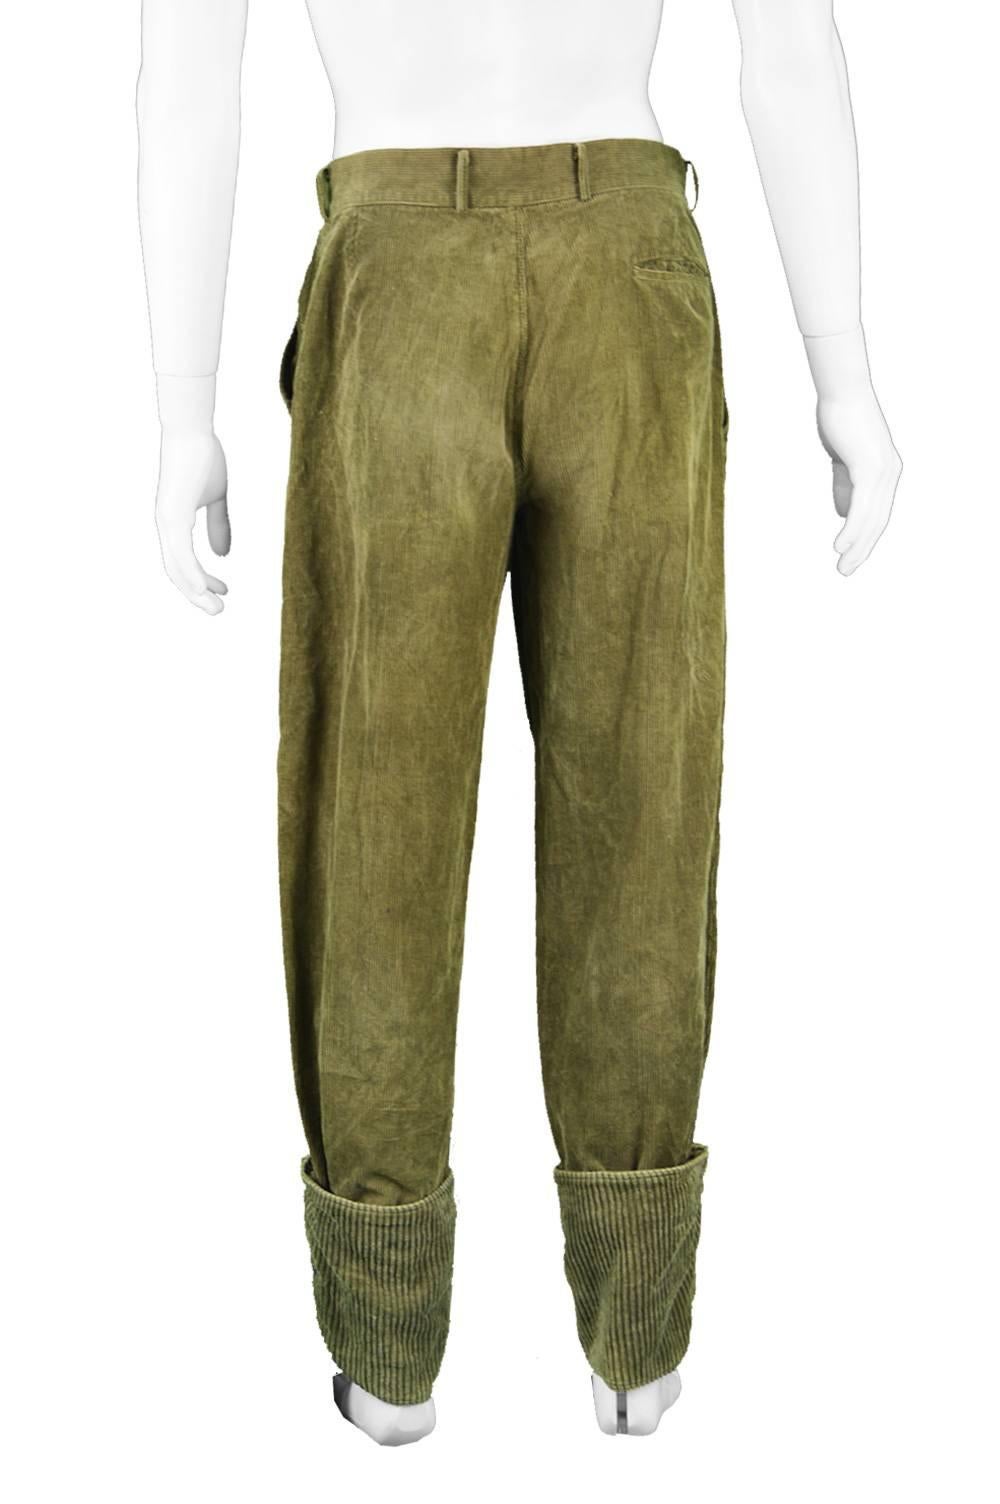 Gianni Versace Men's Green Corduroy Pants with Jumbo Cord Turn Ups, 1980s For Sale 2